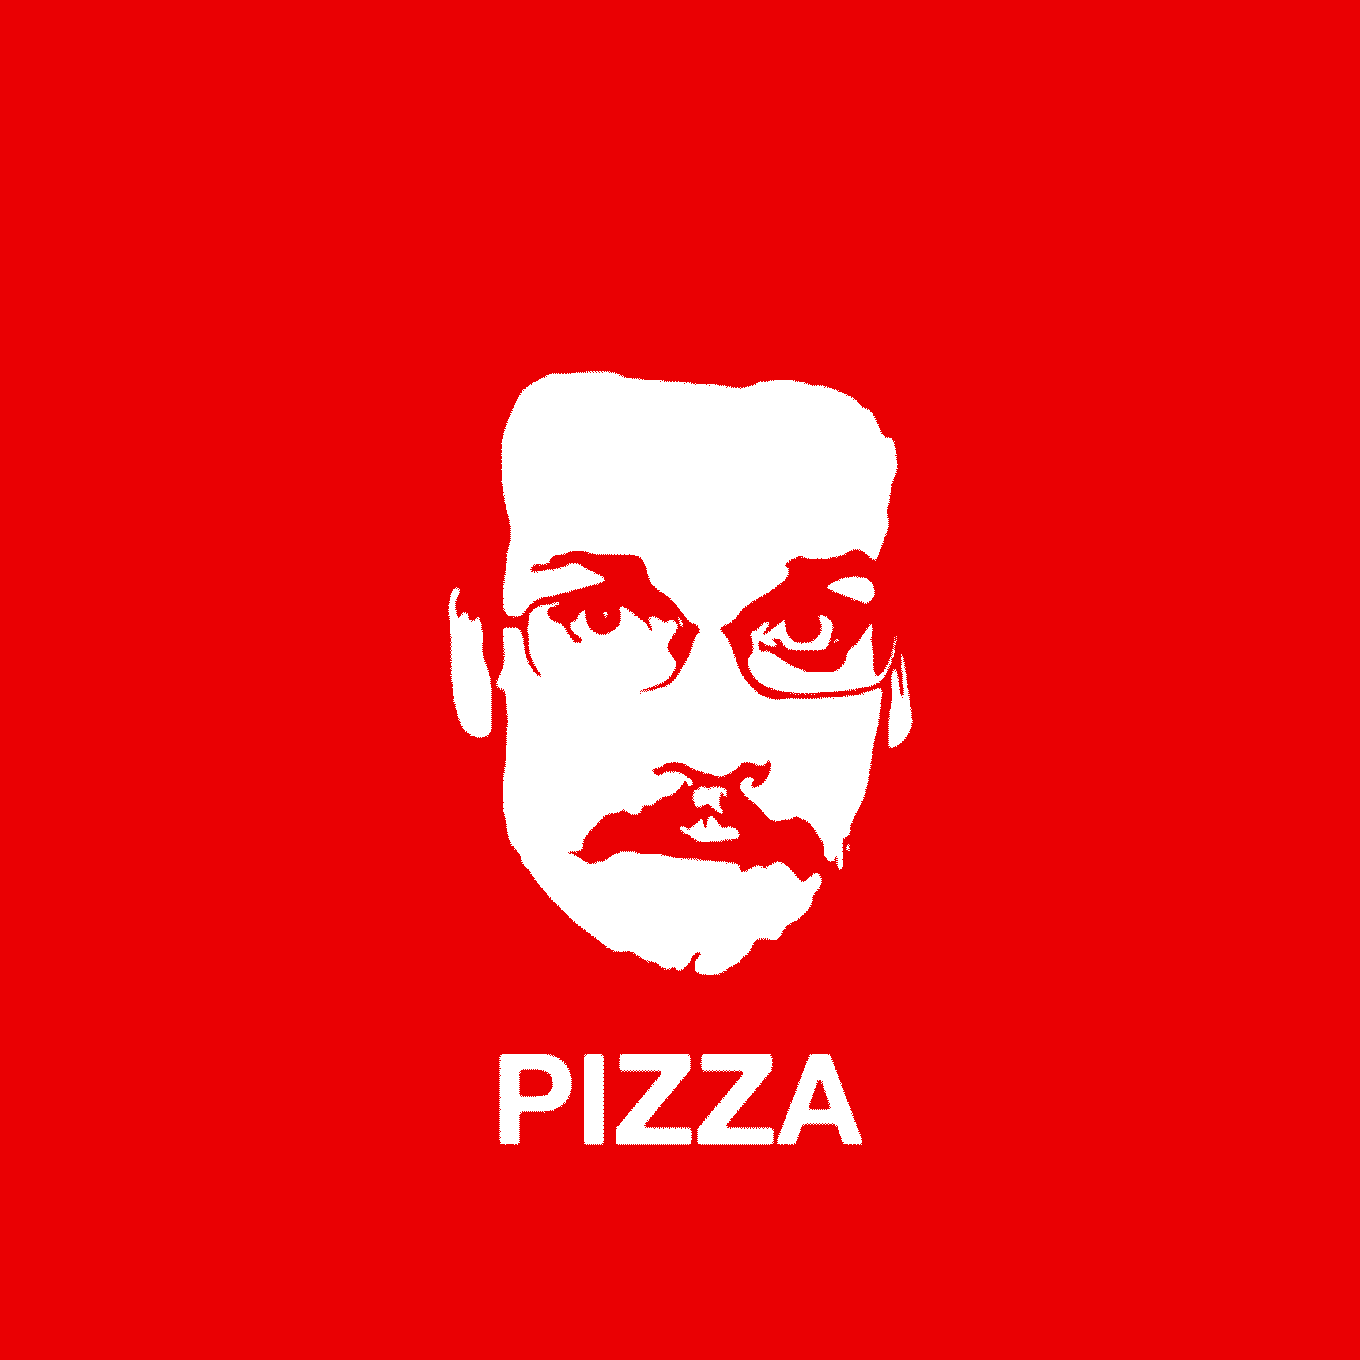 The original red Pizza John artwork